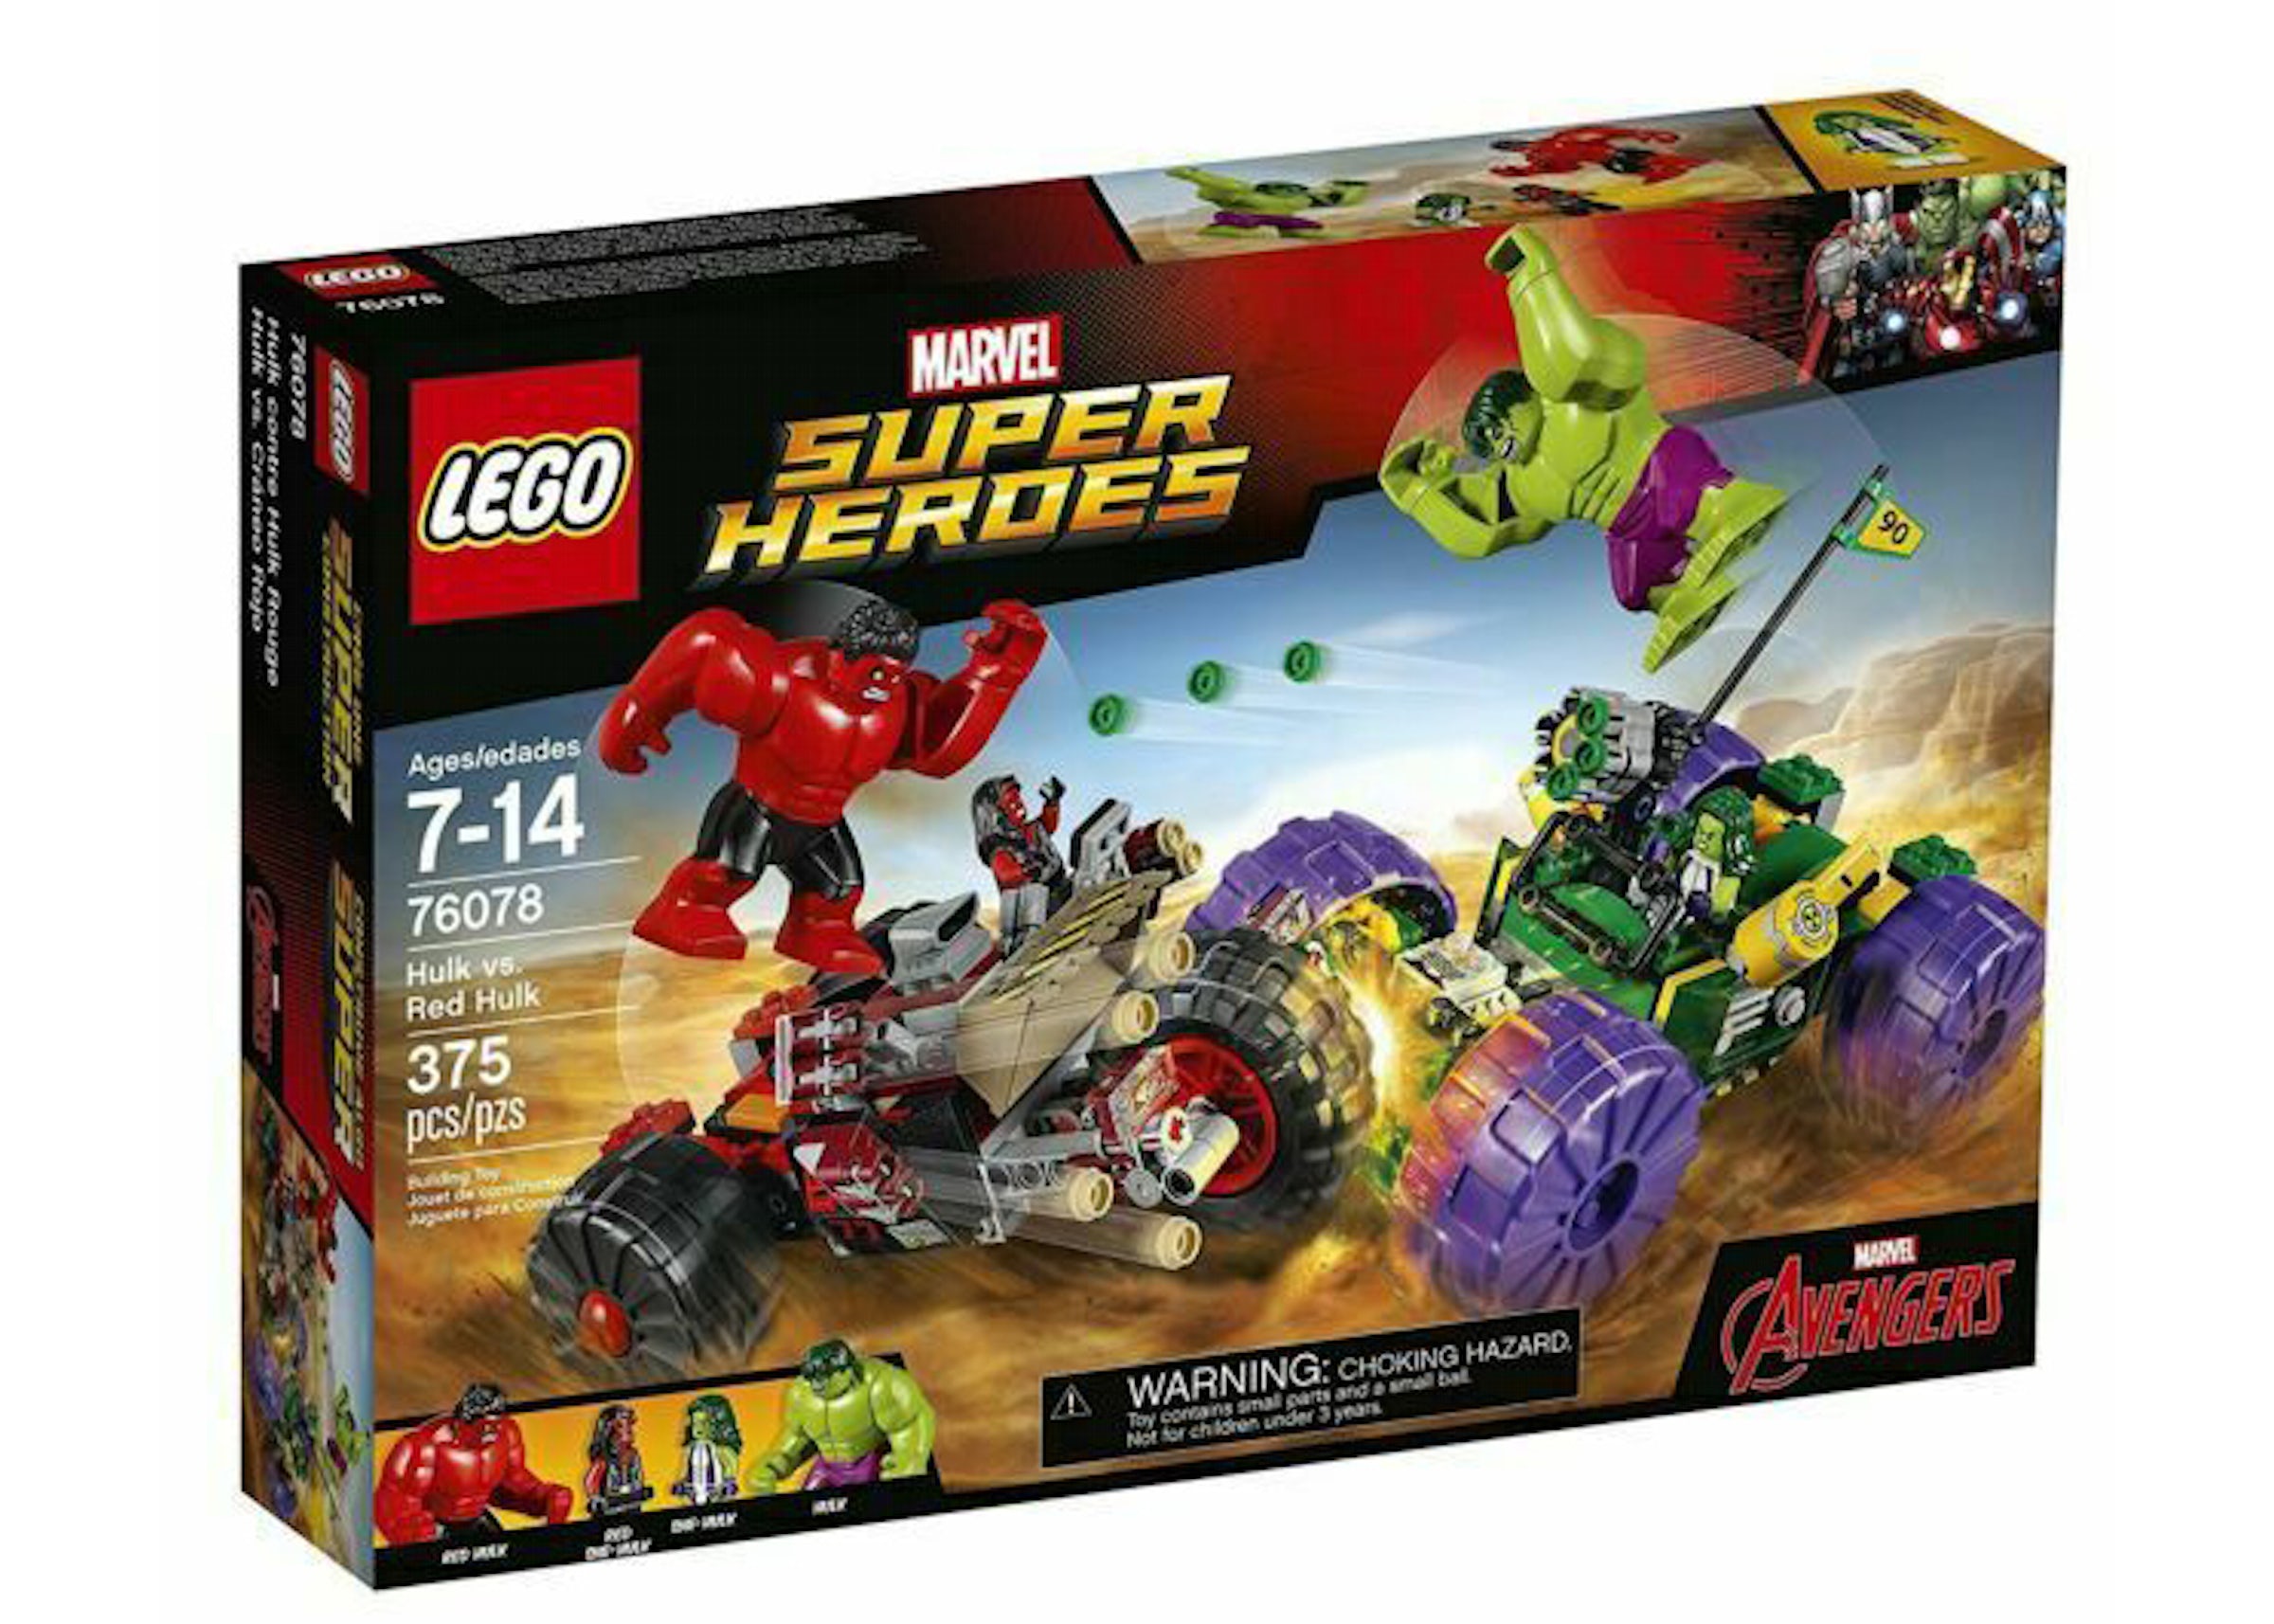 LEGO Marvel Super Heroes Hulk vs Red Hulk Set 76078 - US